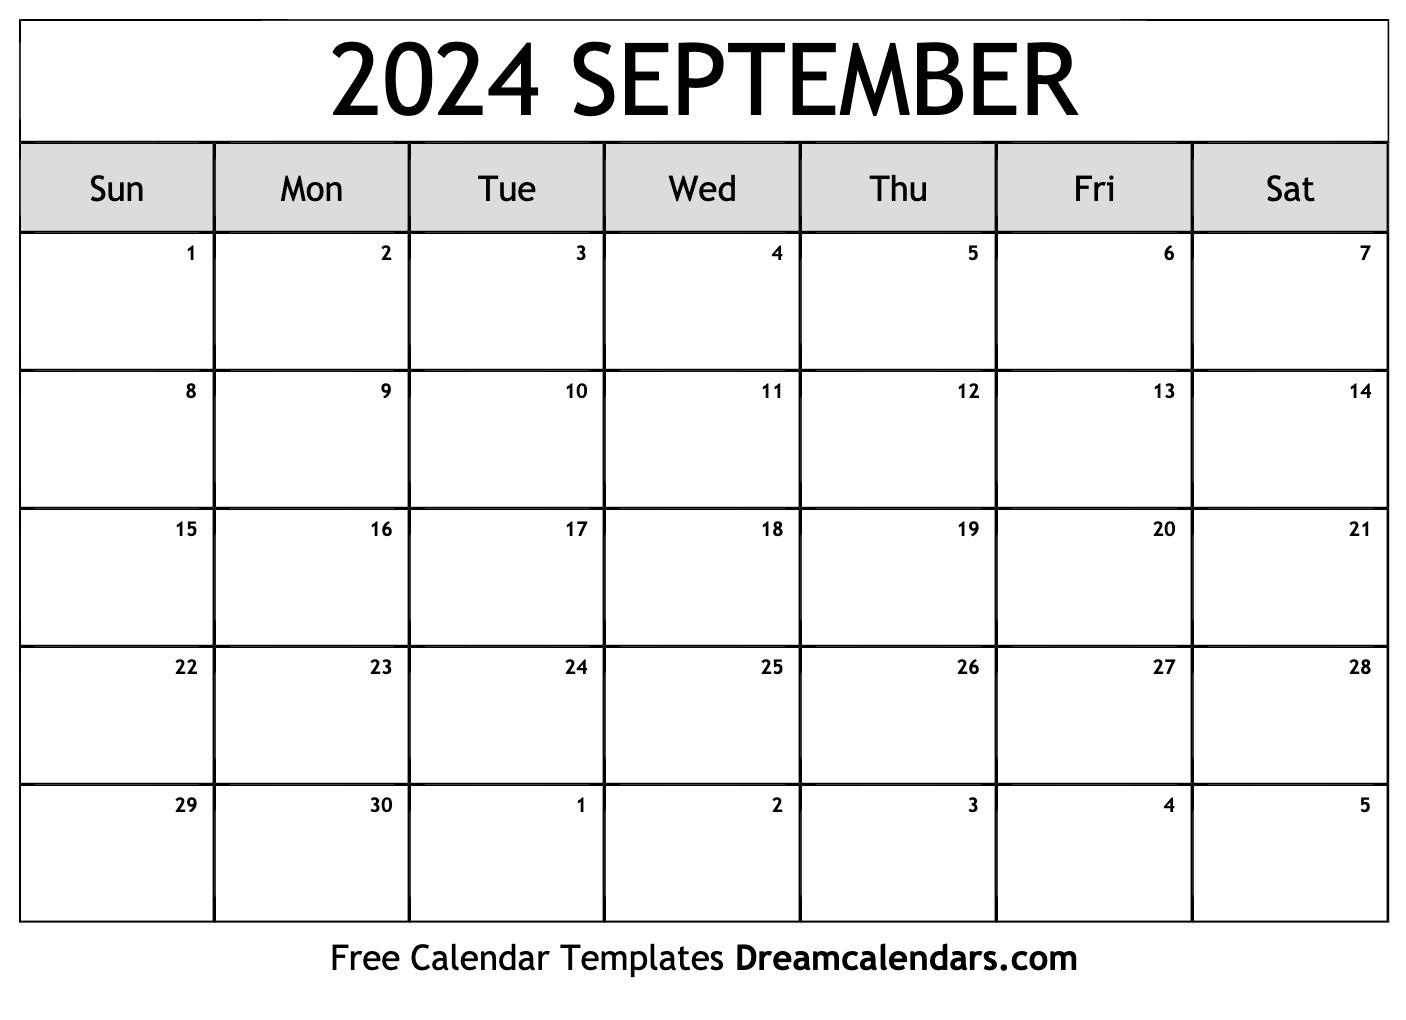 September 2024 Calendar | Free Blank Printable With Holidays for Free Printable Calendar 2024 September